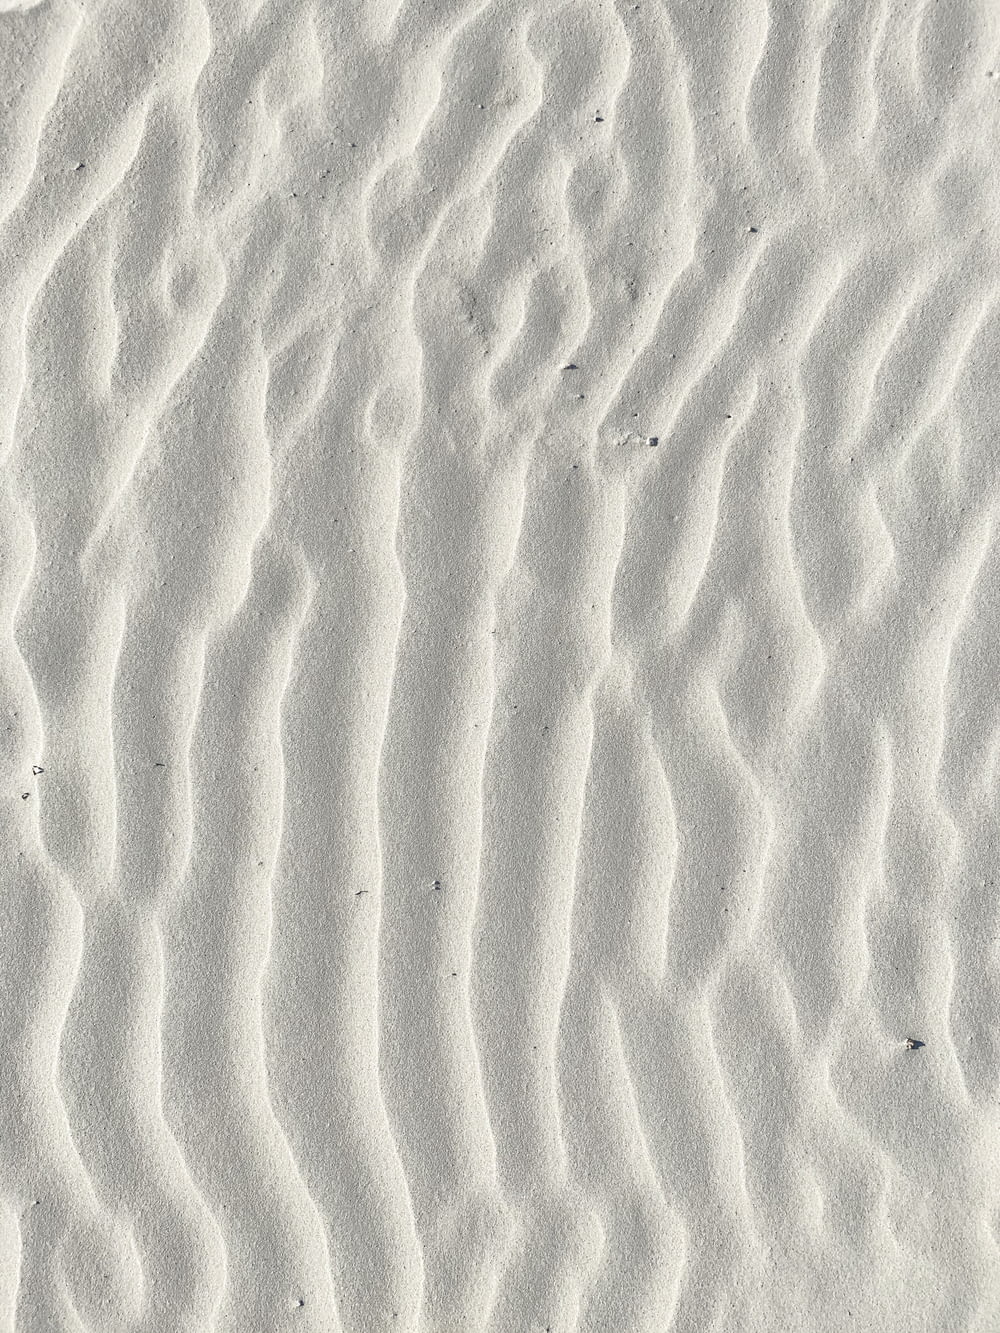 macro photography of white sand